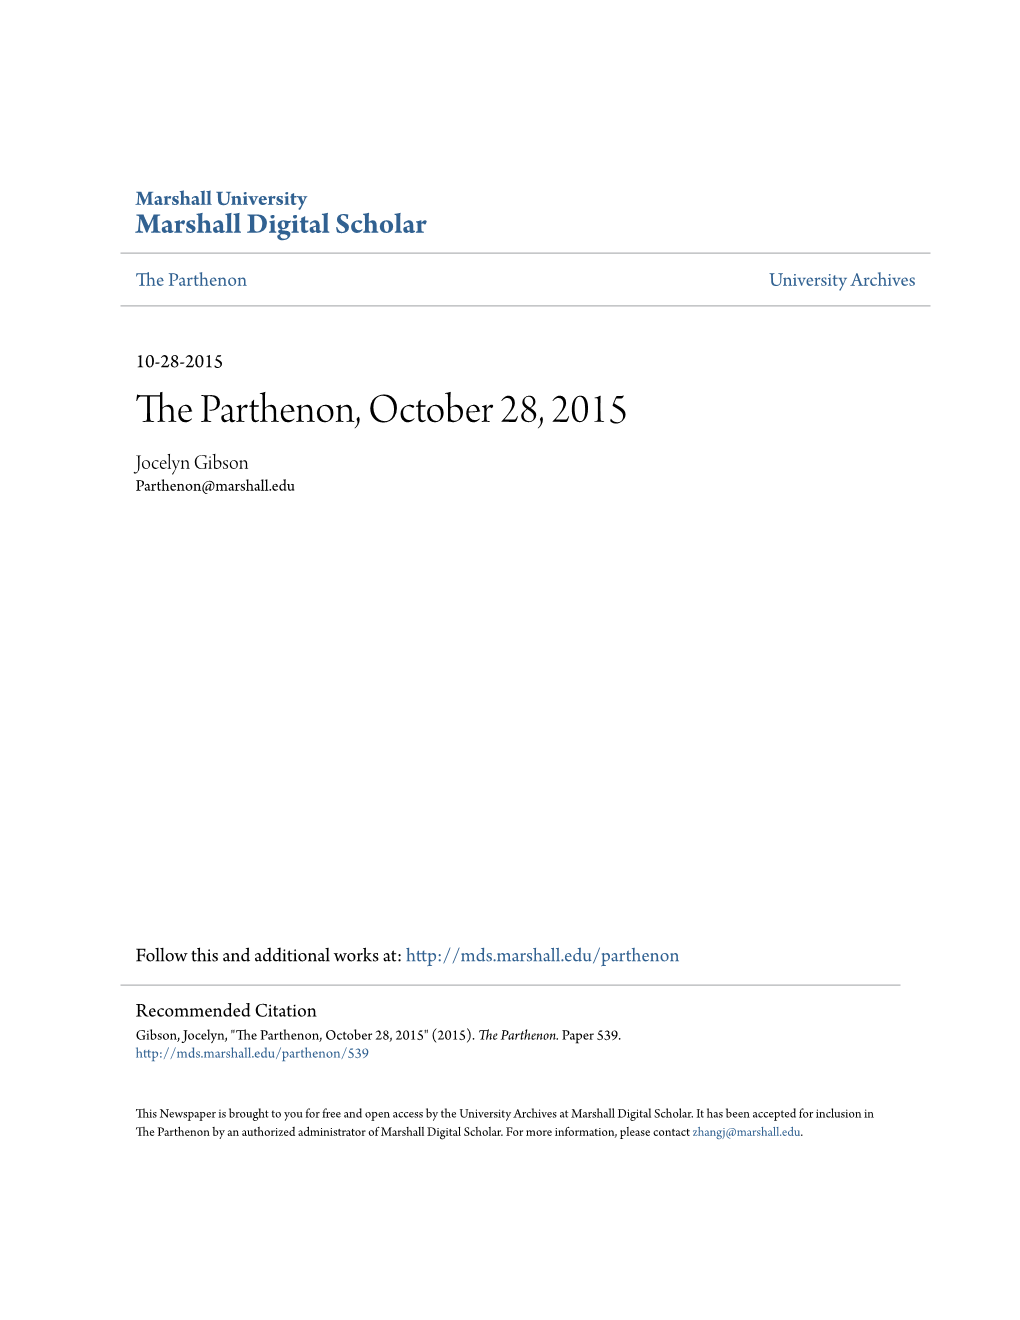 The Parthenon, October 28, 2015